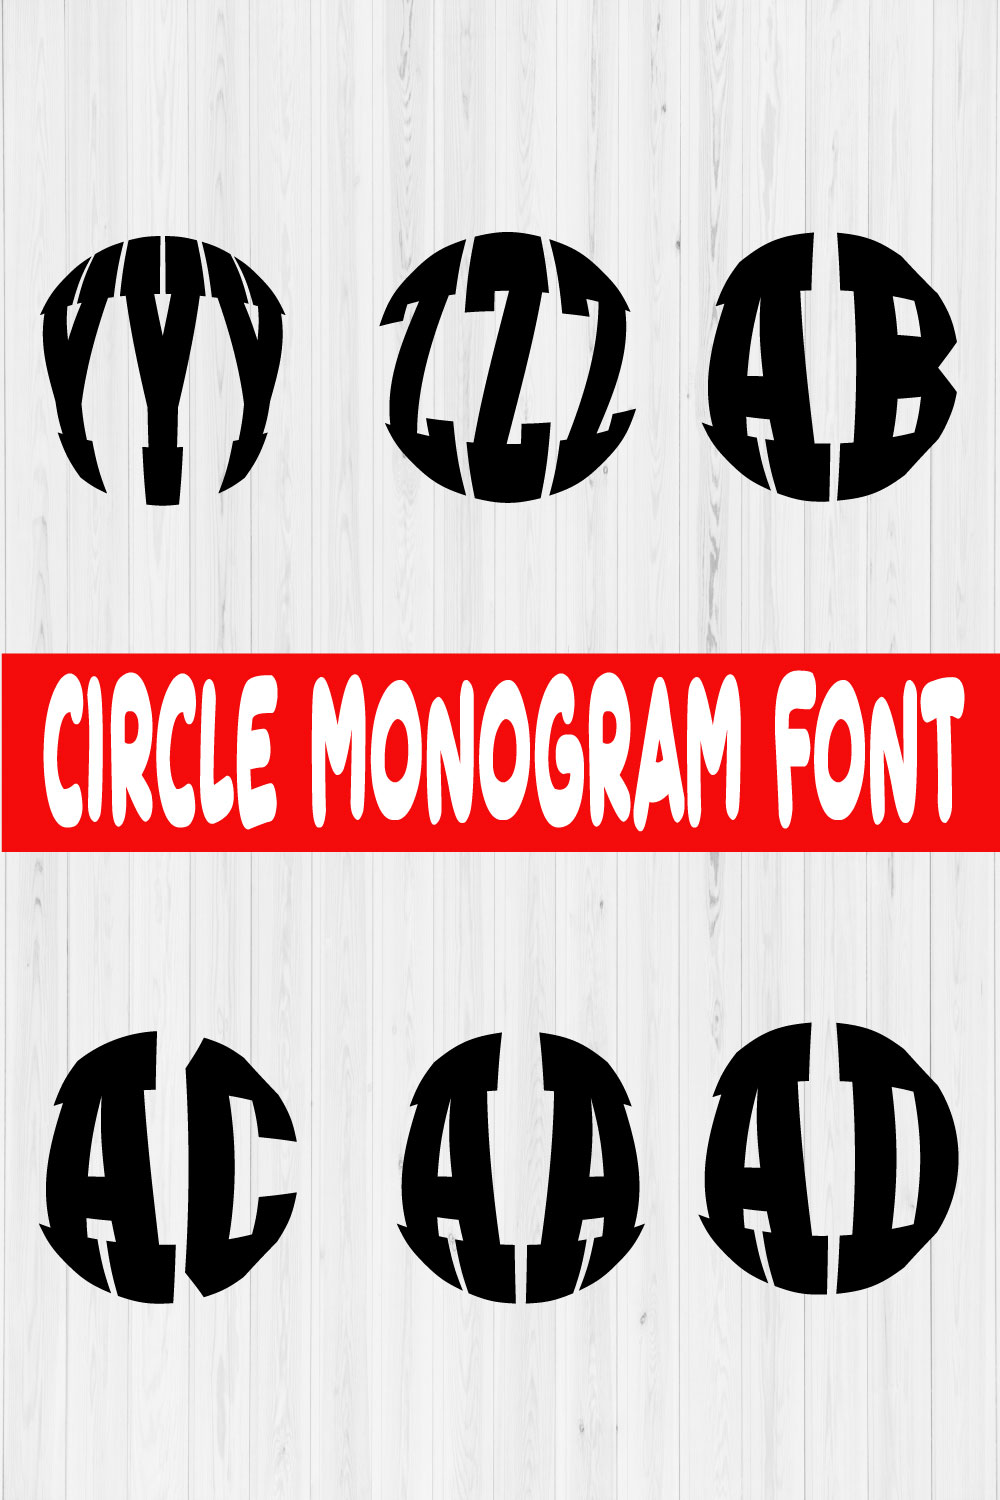 Circle Monogram Font Vol5 pinterest preview image.